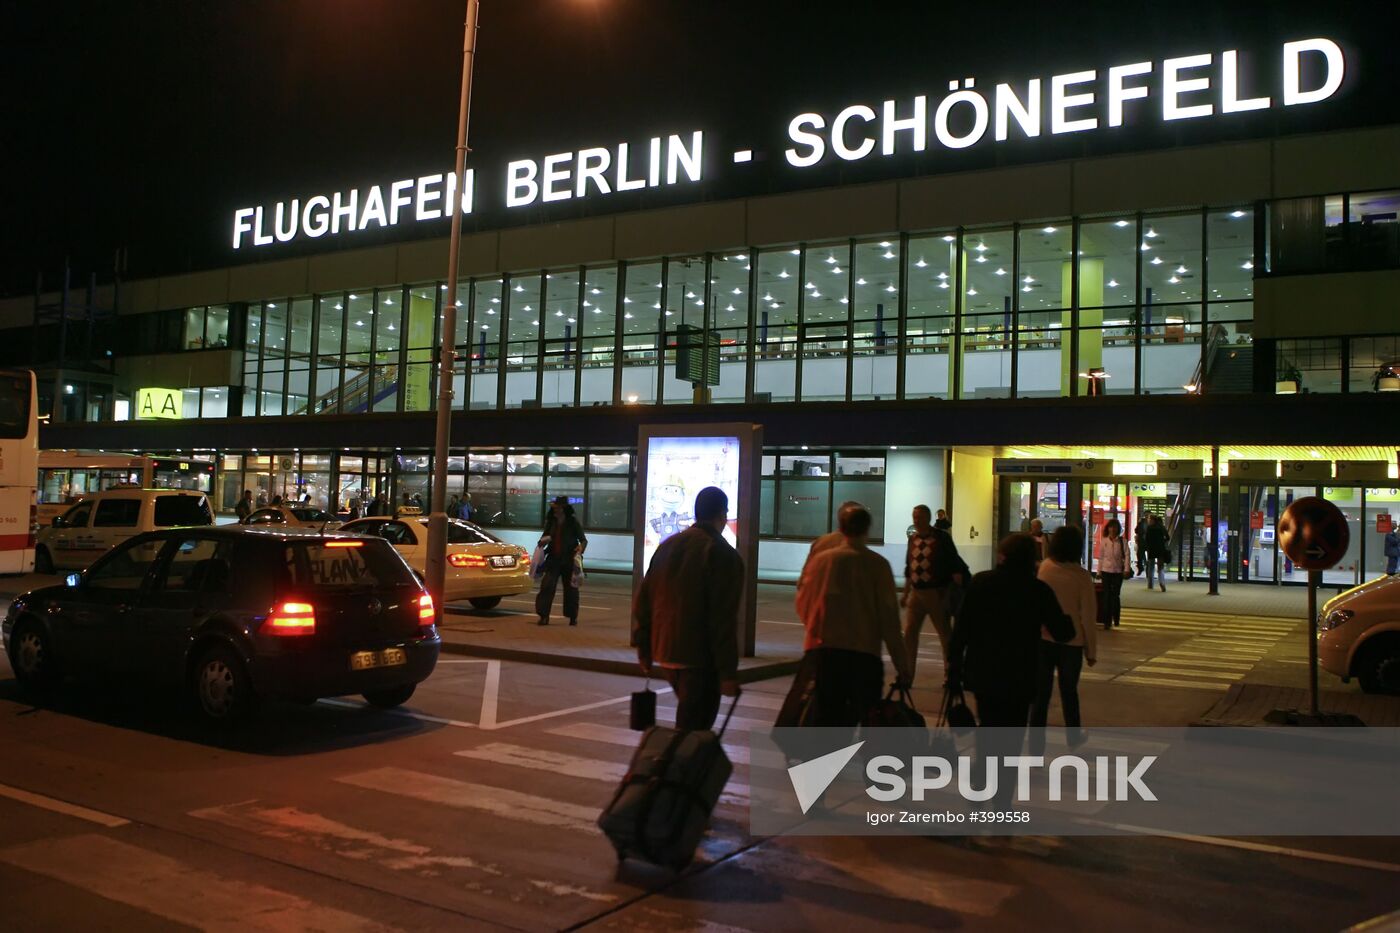 Schoenefeld international airport, Berlin